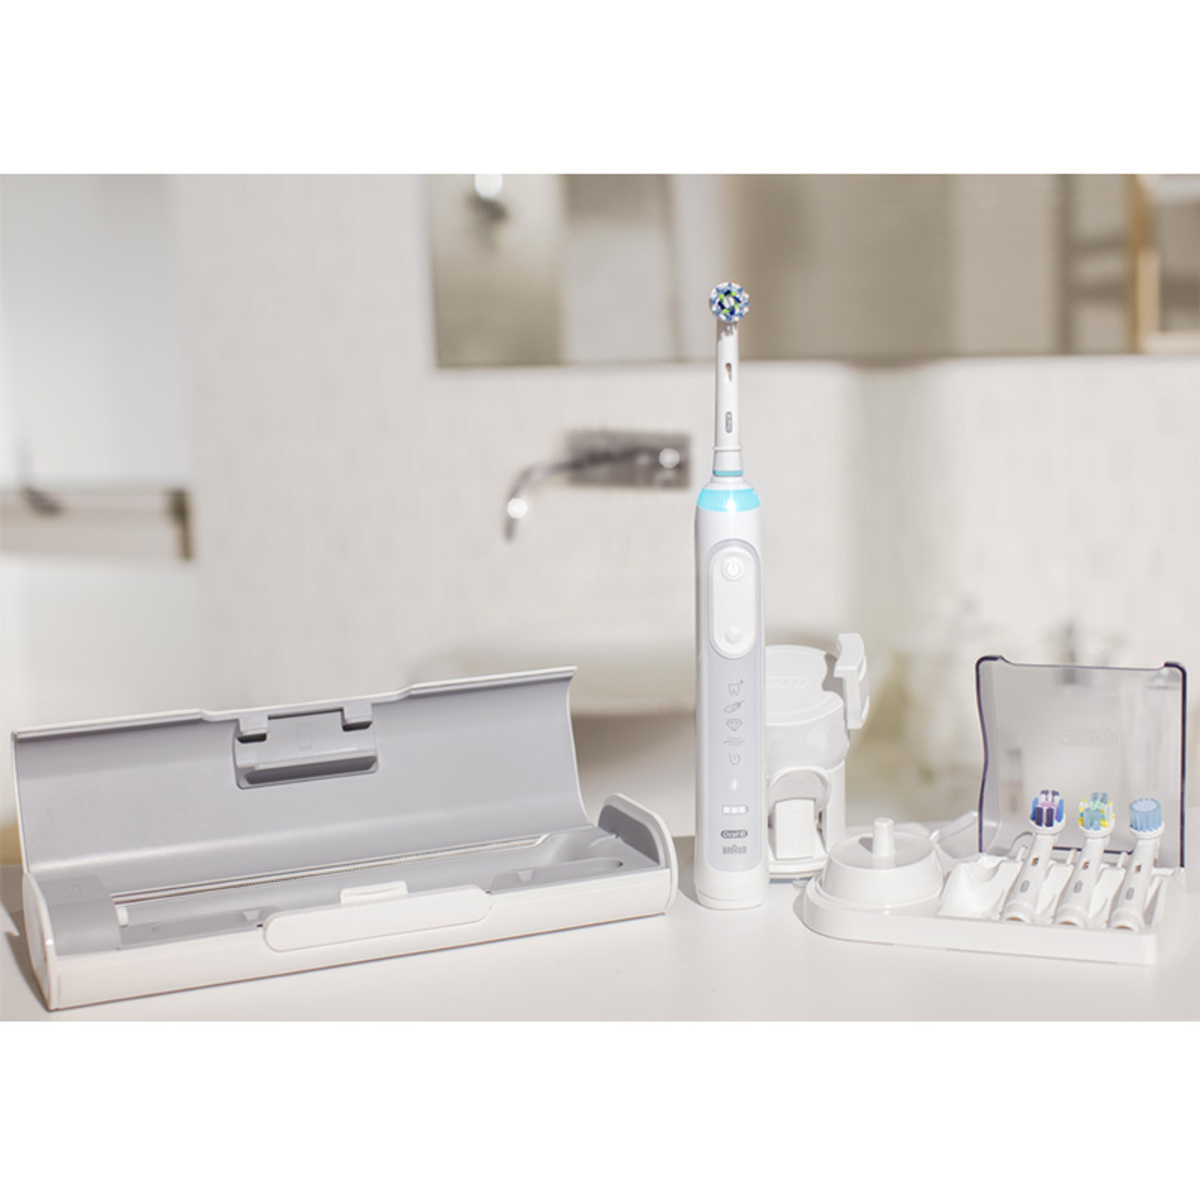 Oral-B Genius 8000 Power Toothbrush